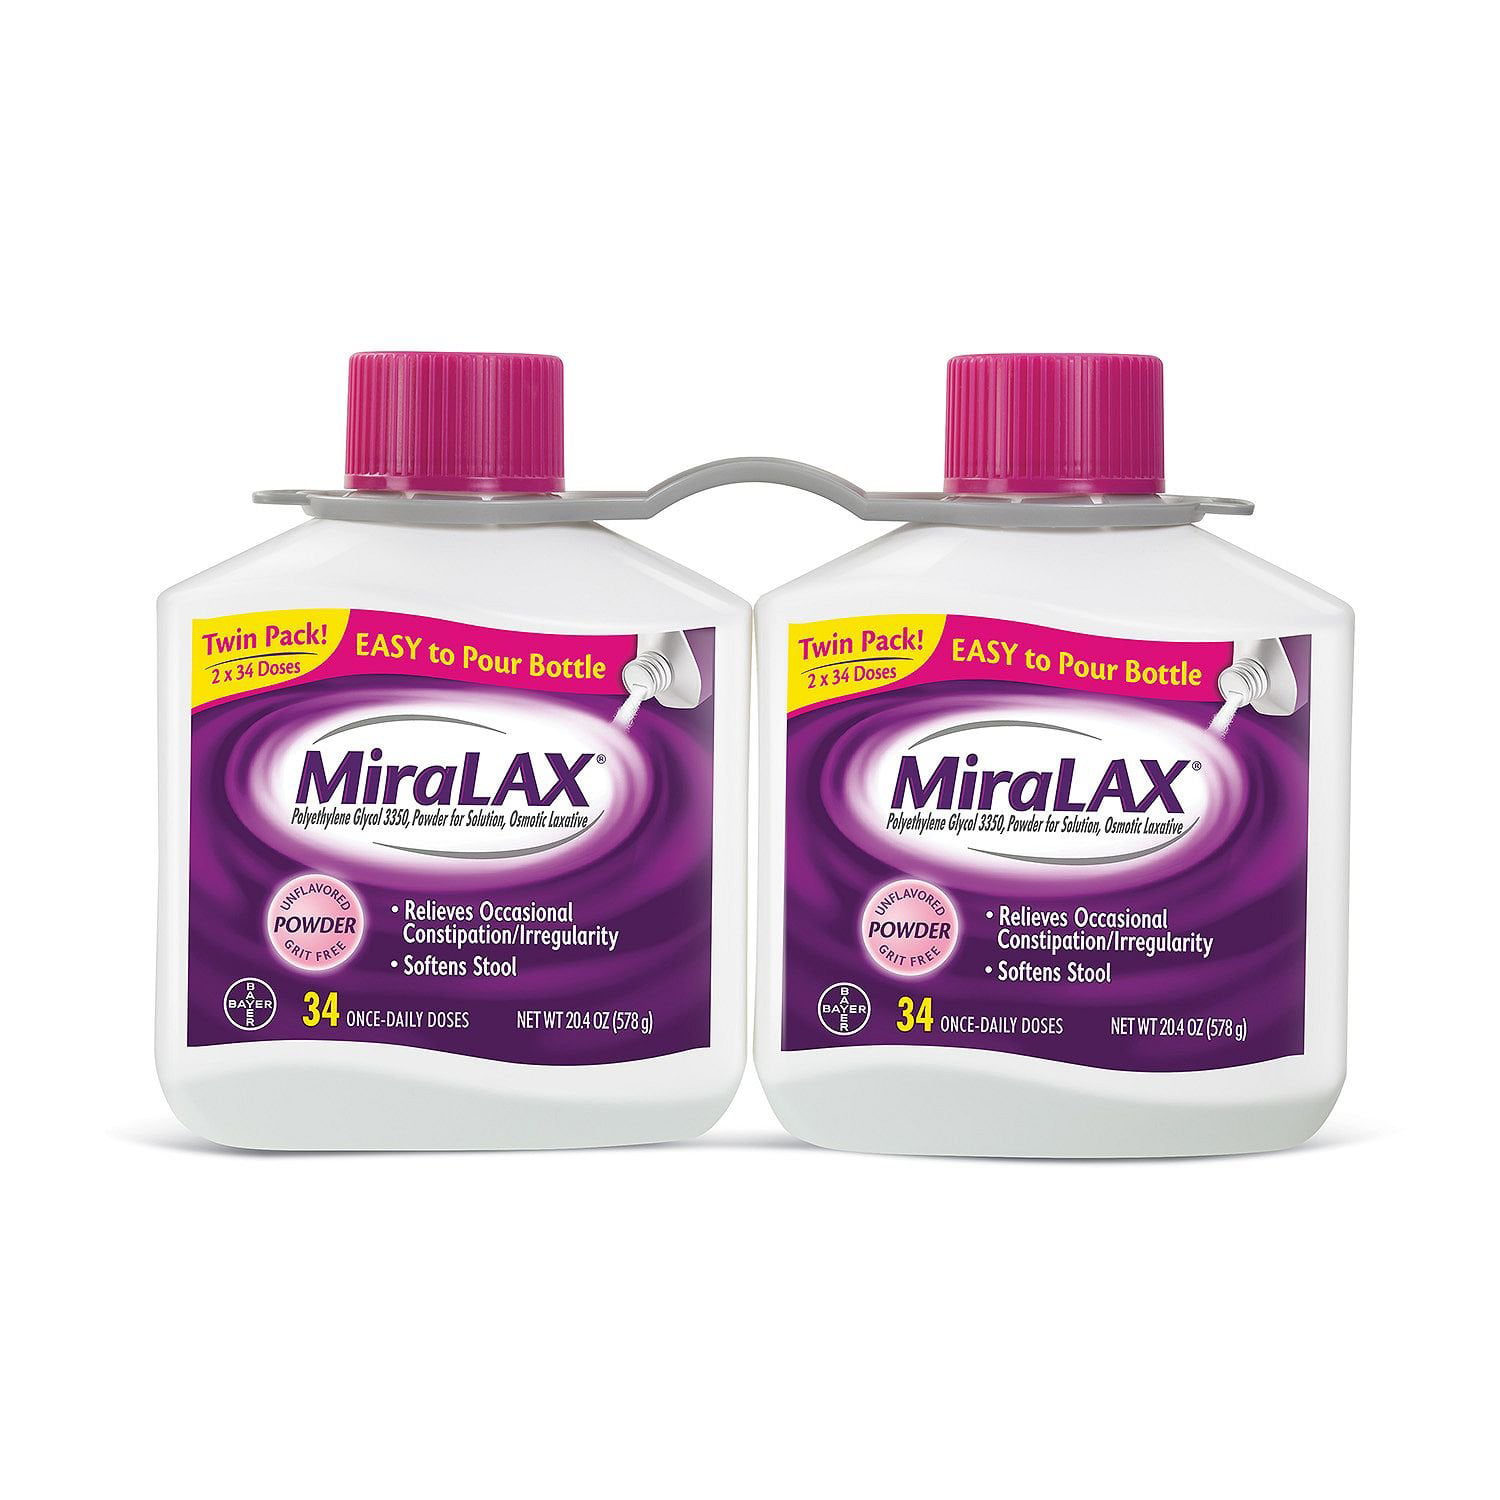 miralax-twin-pack-2-bottles-x-34-doses-by-miralax-walmart